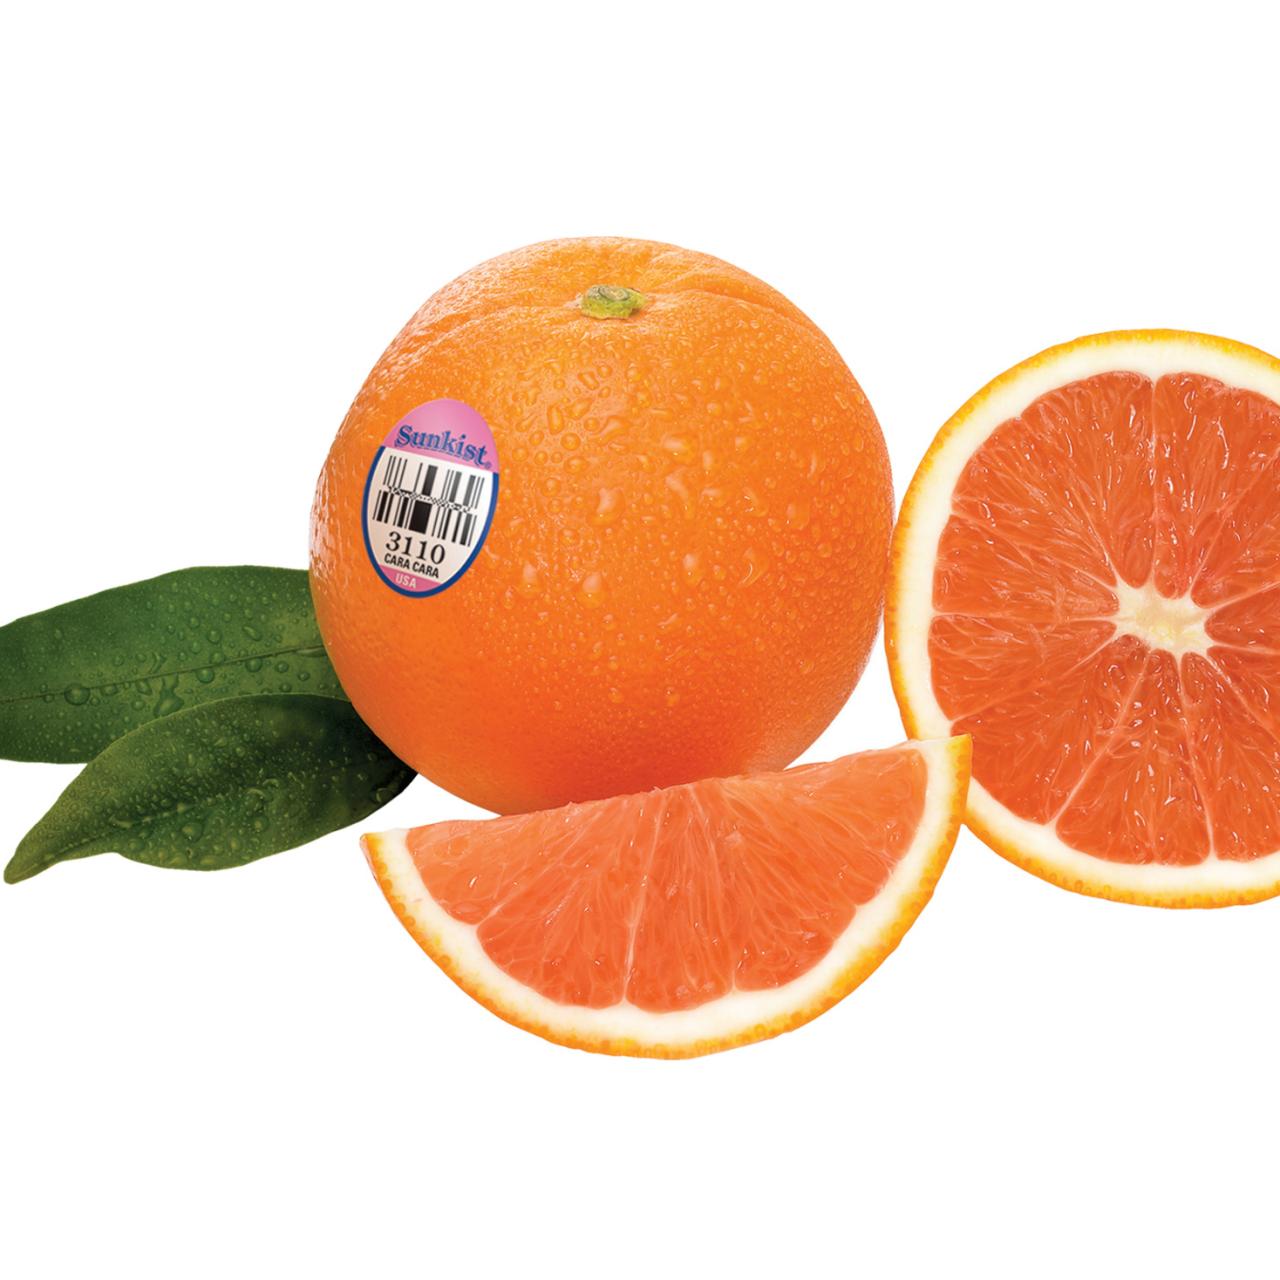 https://food.fnr.sndimg.com/content/dam/images/food/fullset/2013/2/1/0/HE_cara-cara-oranges_s4x3.jpg.rend.hgtvcom.1280.1280.suffix/1371613750898.jpeg